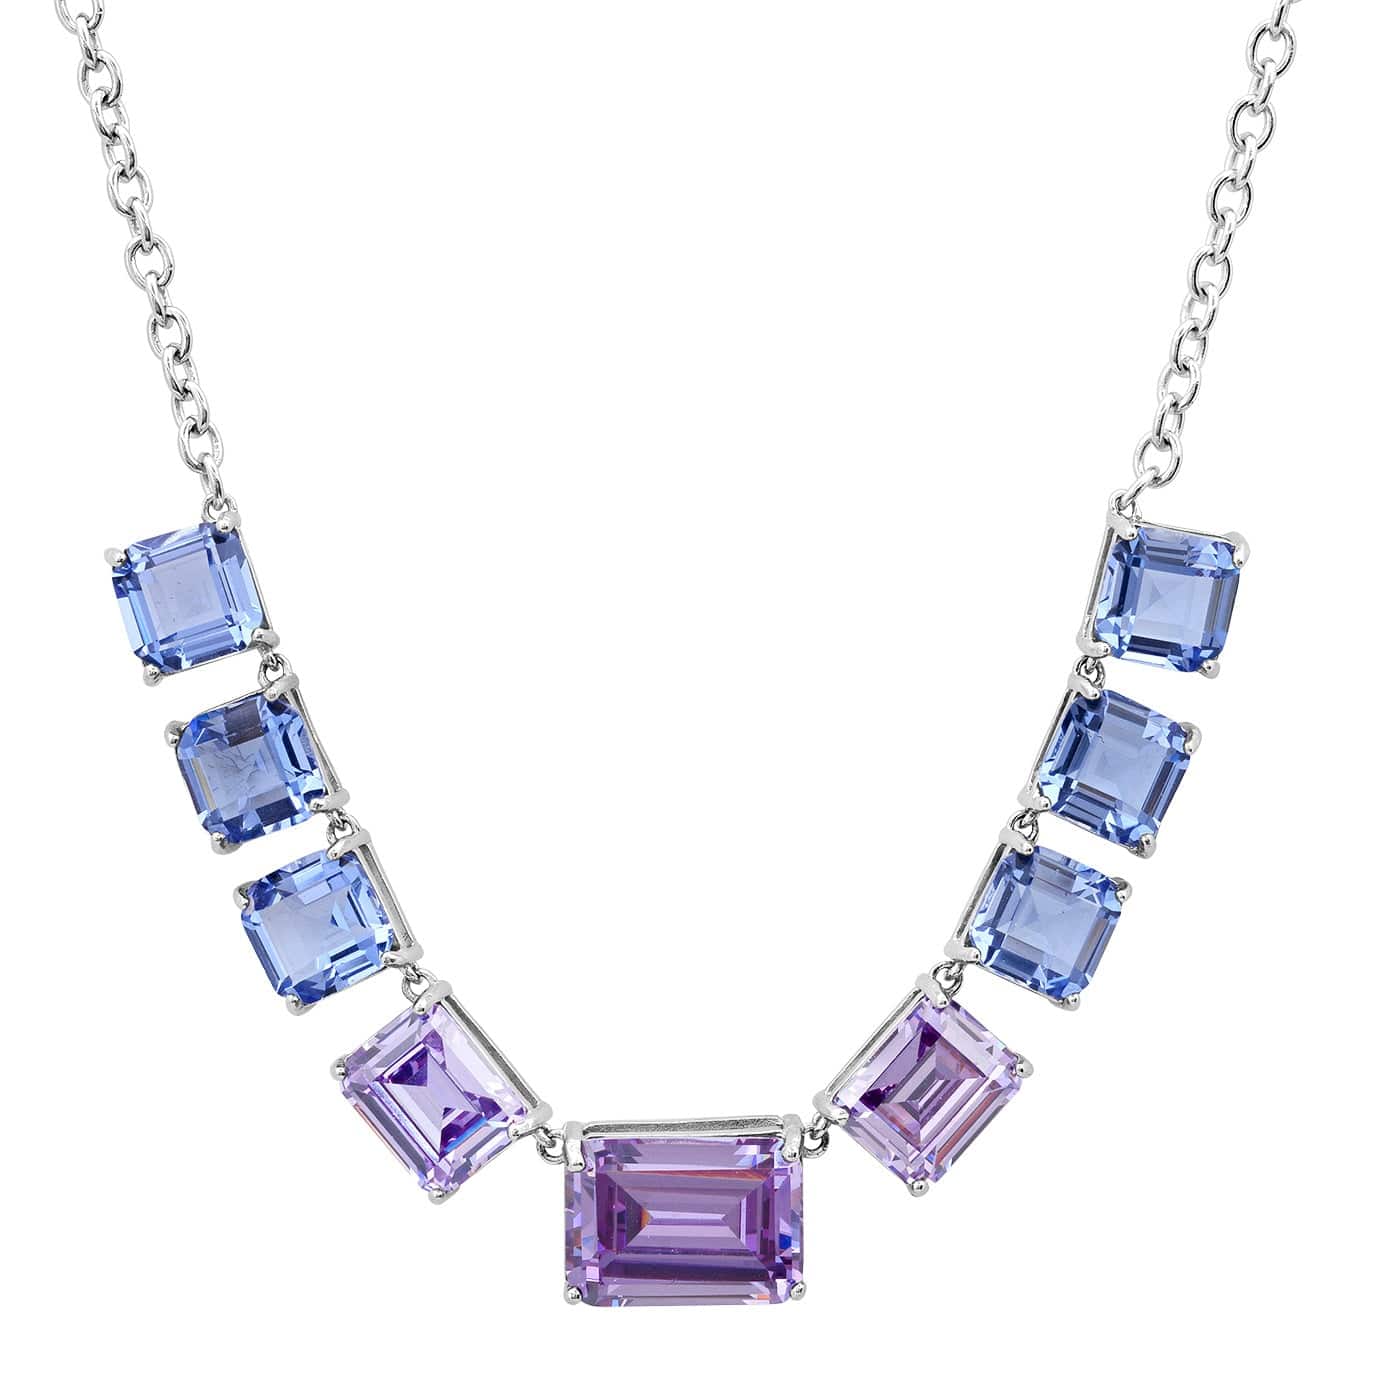 TAI JEWELRY Necklace SS/LAV Chunky Emerald Cut Glass Stone Necklace